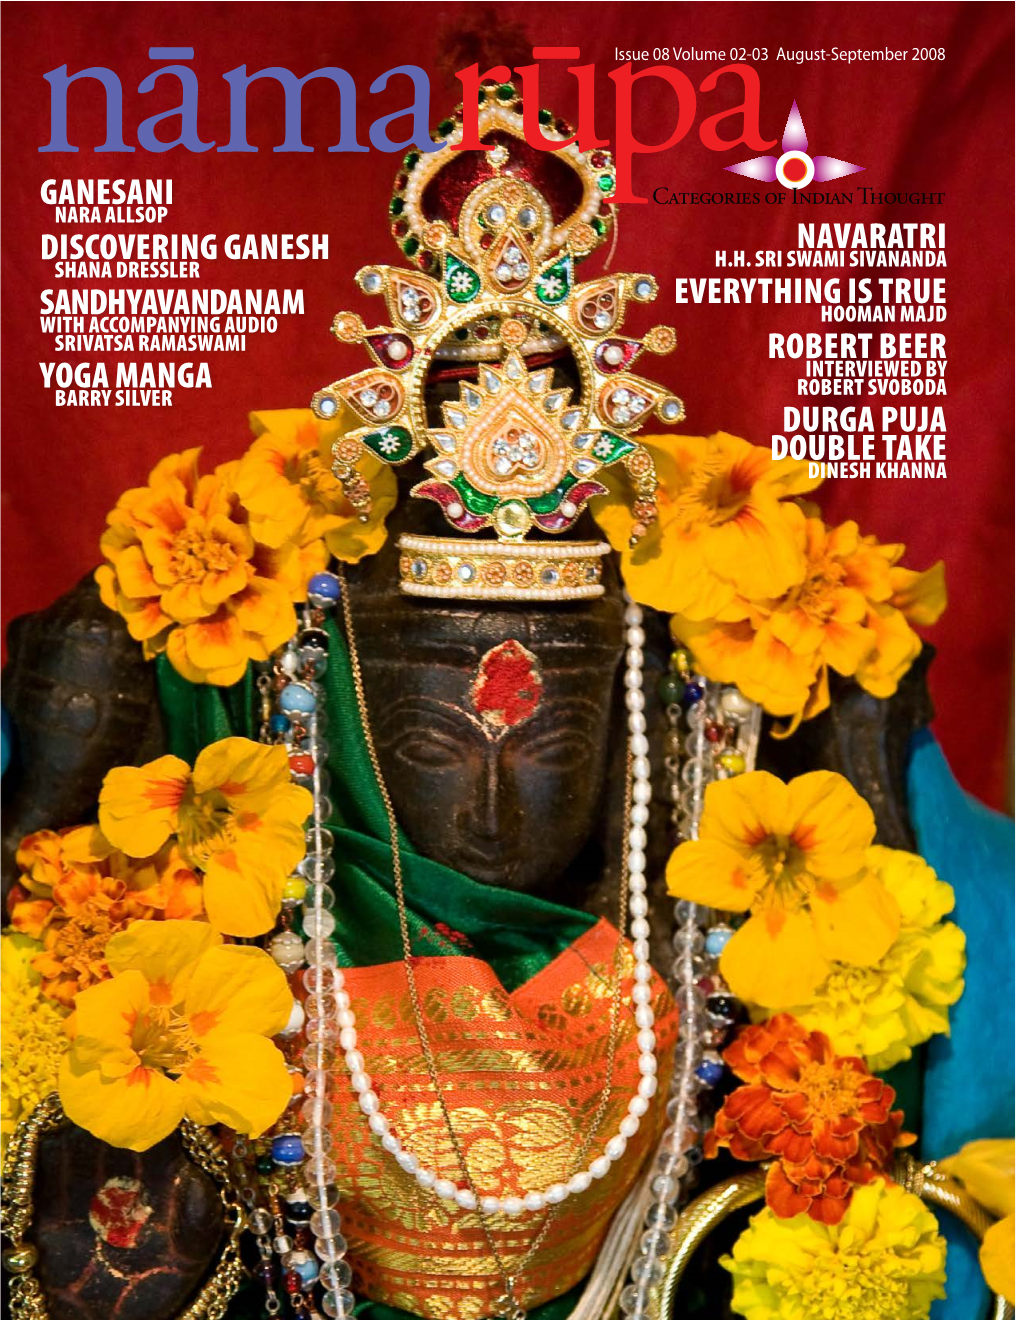 Ganesani Discovering Ganesh Sandhyavandanam Yoga